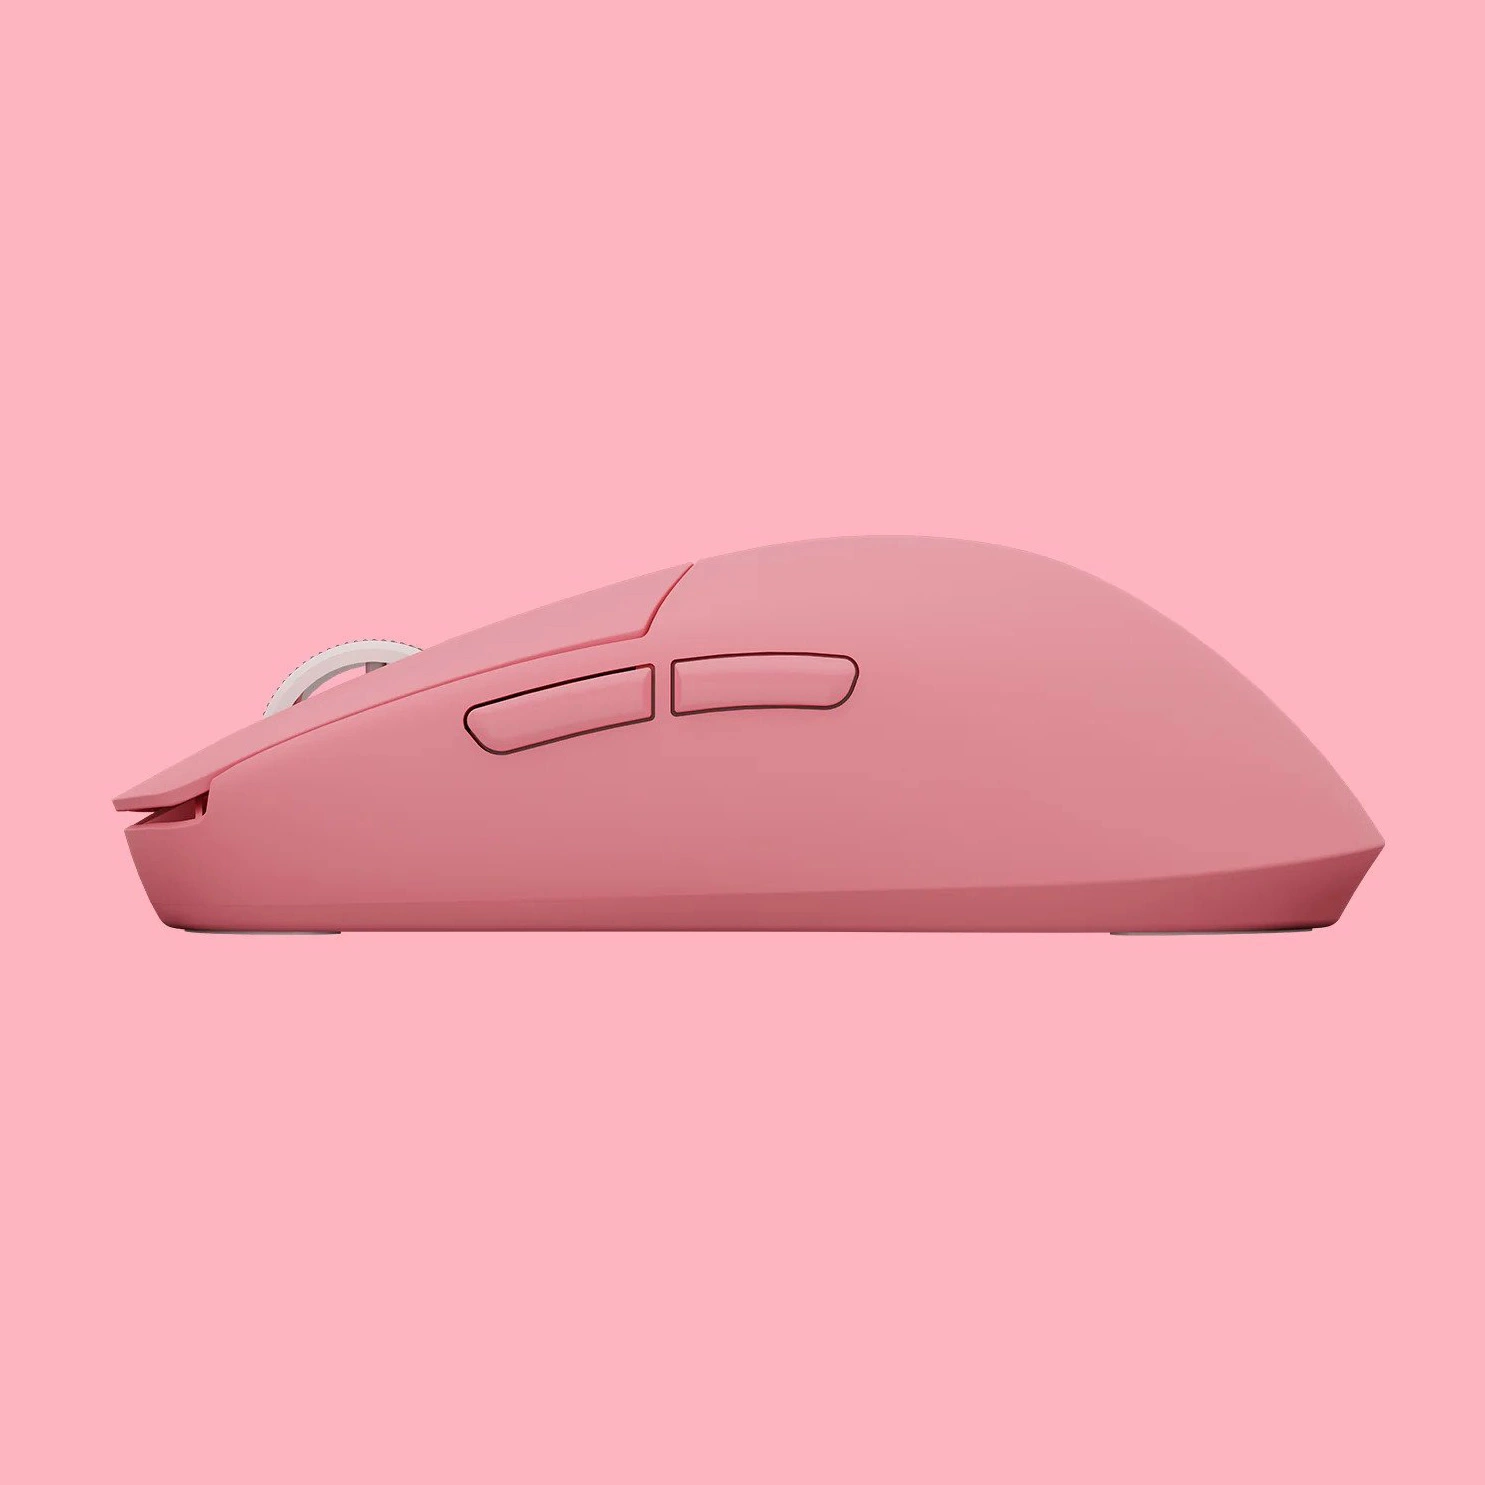 Ninjutso Sora Wireless Gaming Mouse - Pink Limited Edition